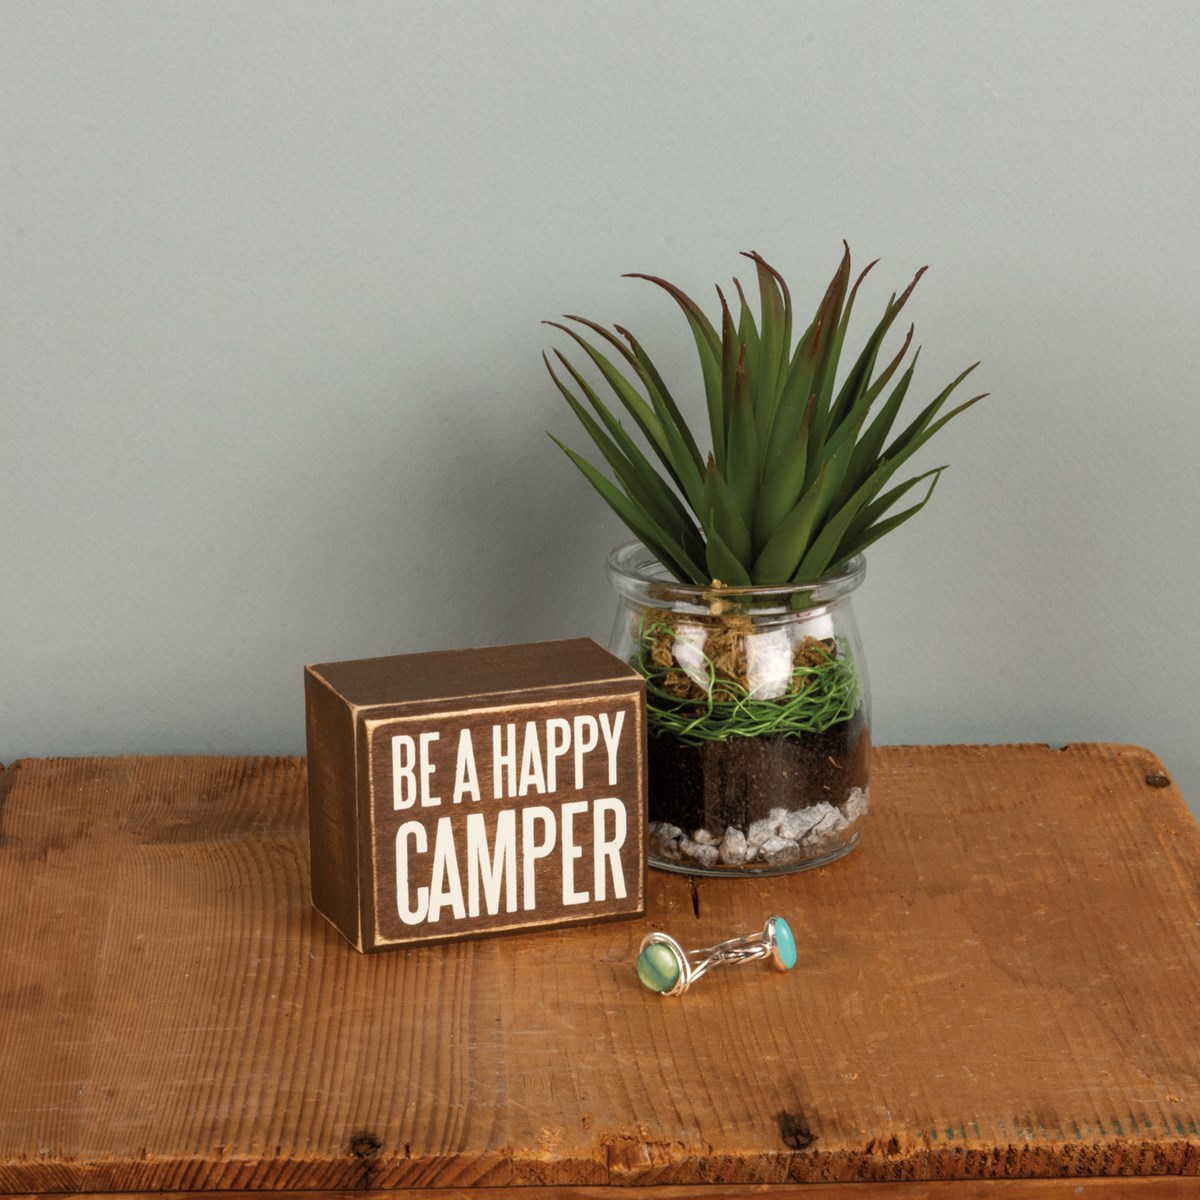 Box Sign - Happy Camper - 3" x 2.50" x 1.75" - Wood